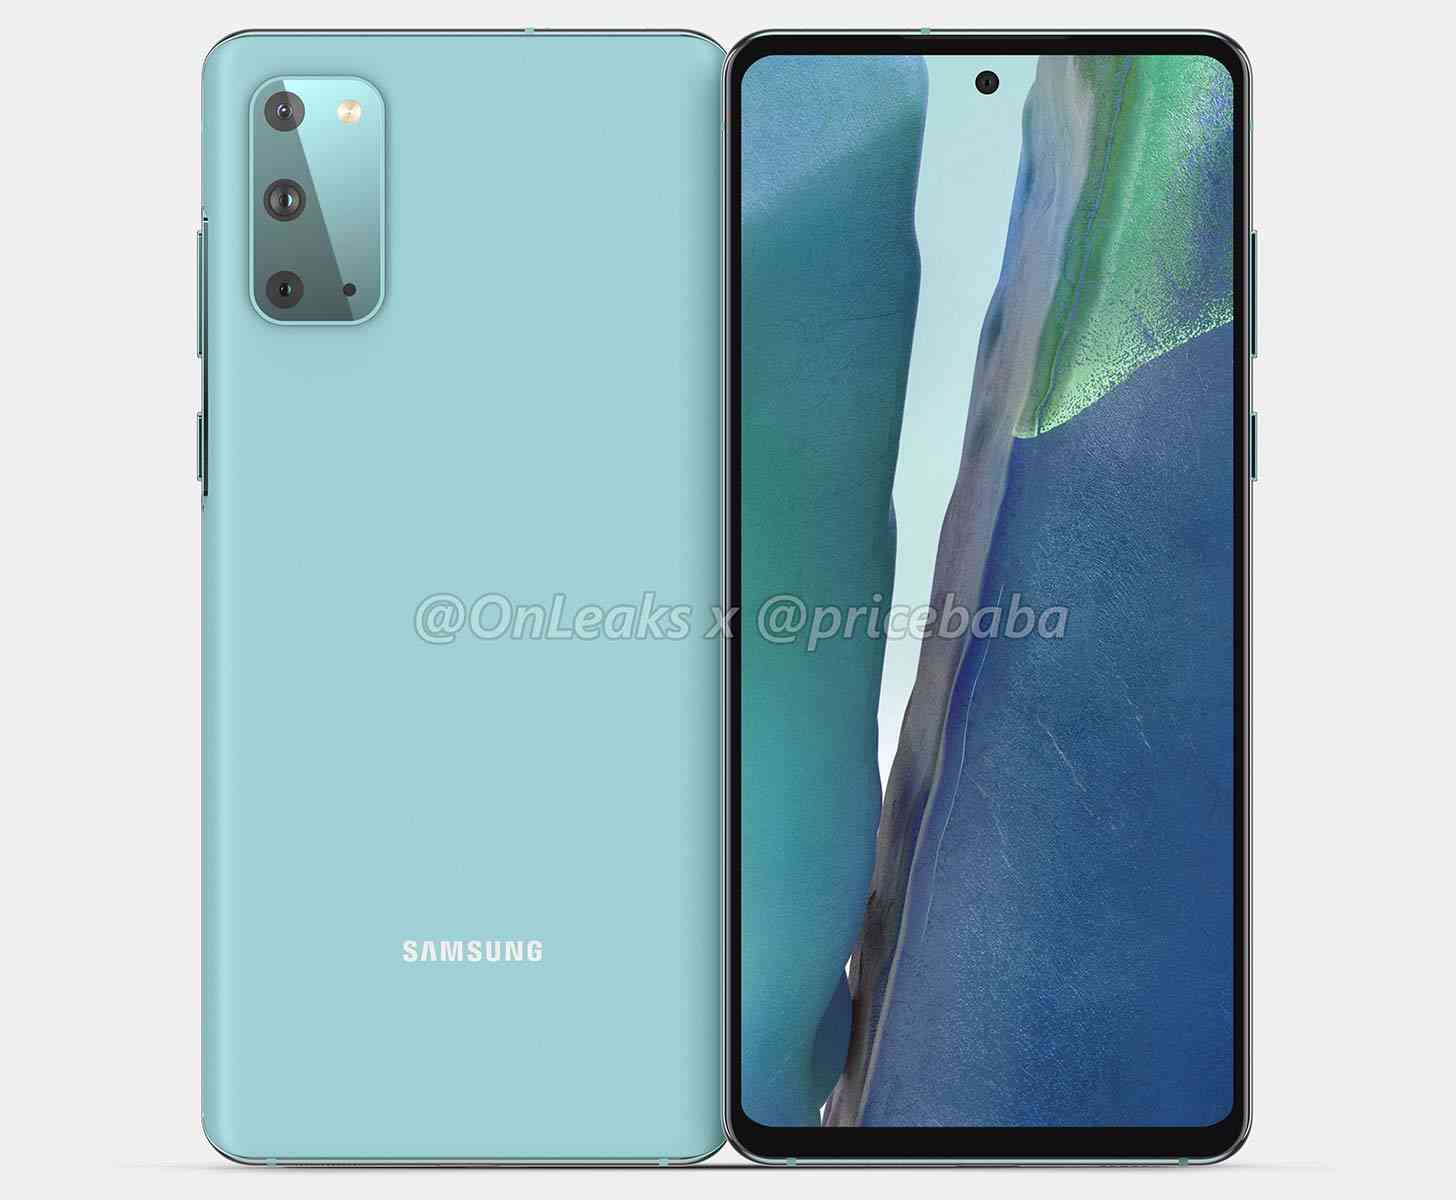 Samsung Galaxy S20 FE 5G design leak